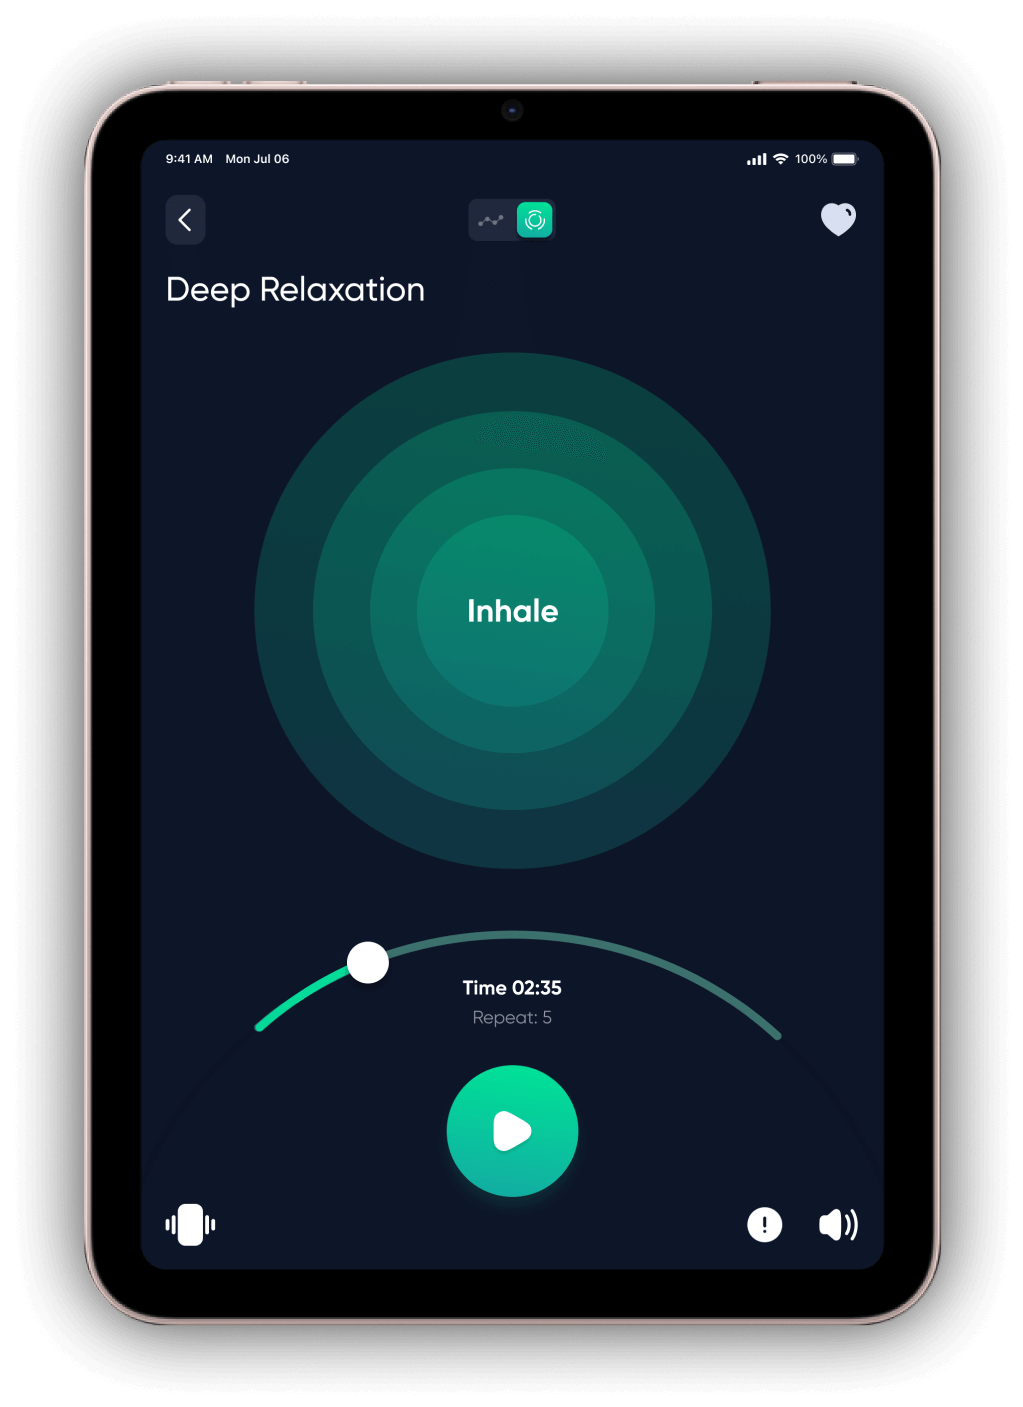 Better Breathe App is Available on iPad